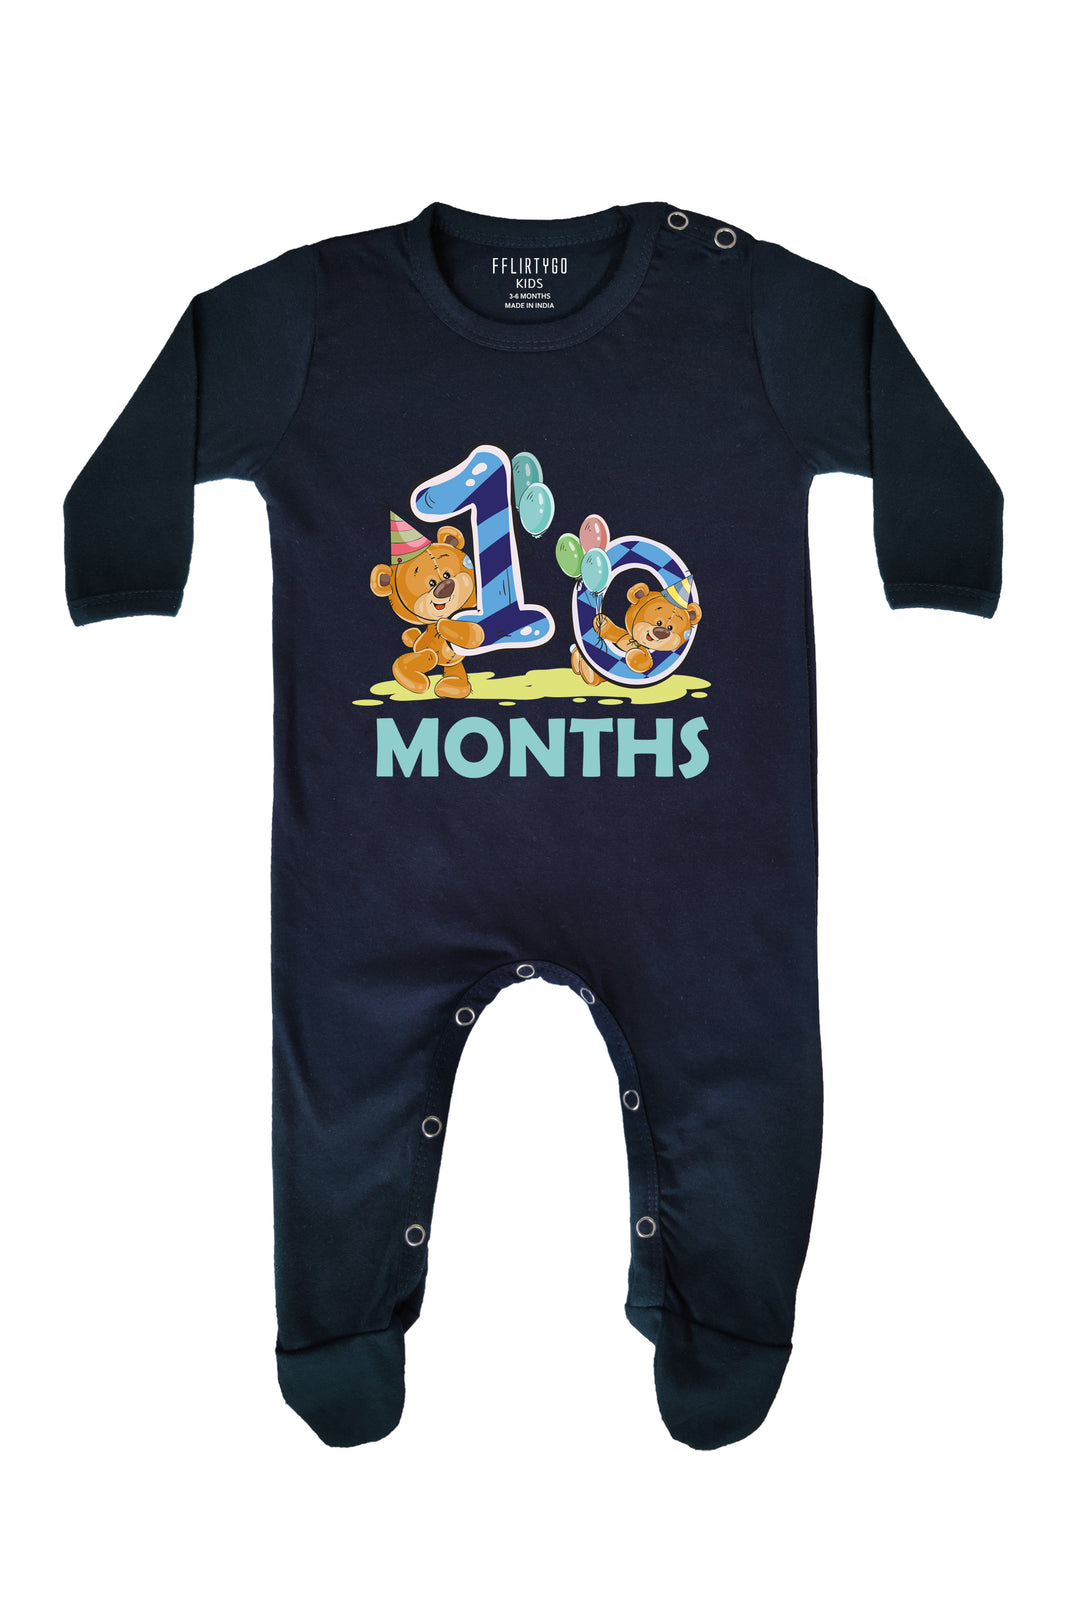 Ten Months Milestone Baby Romper | Onesies